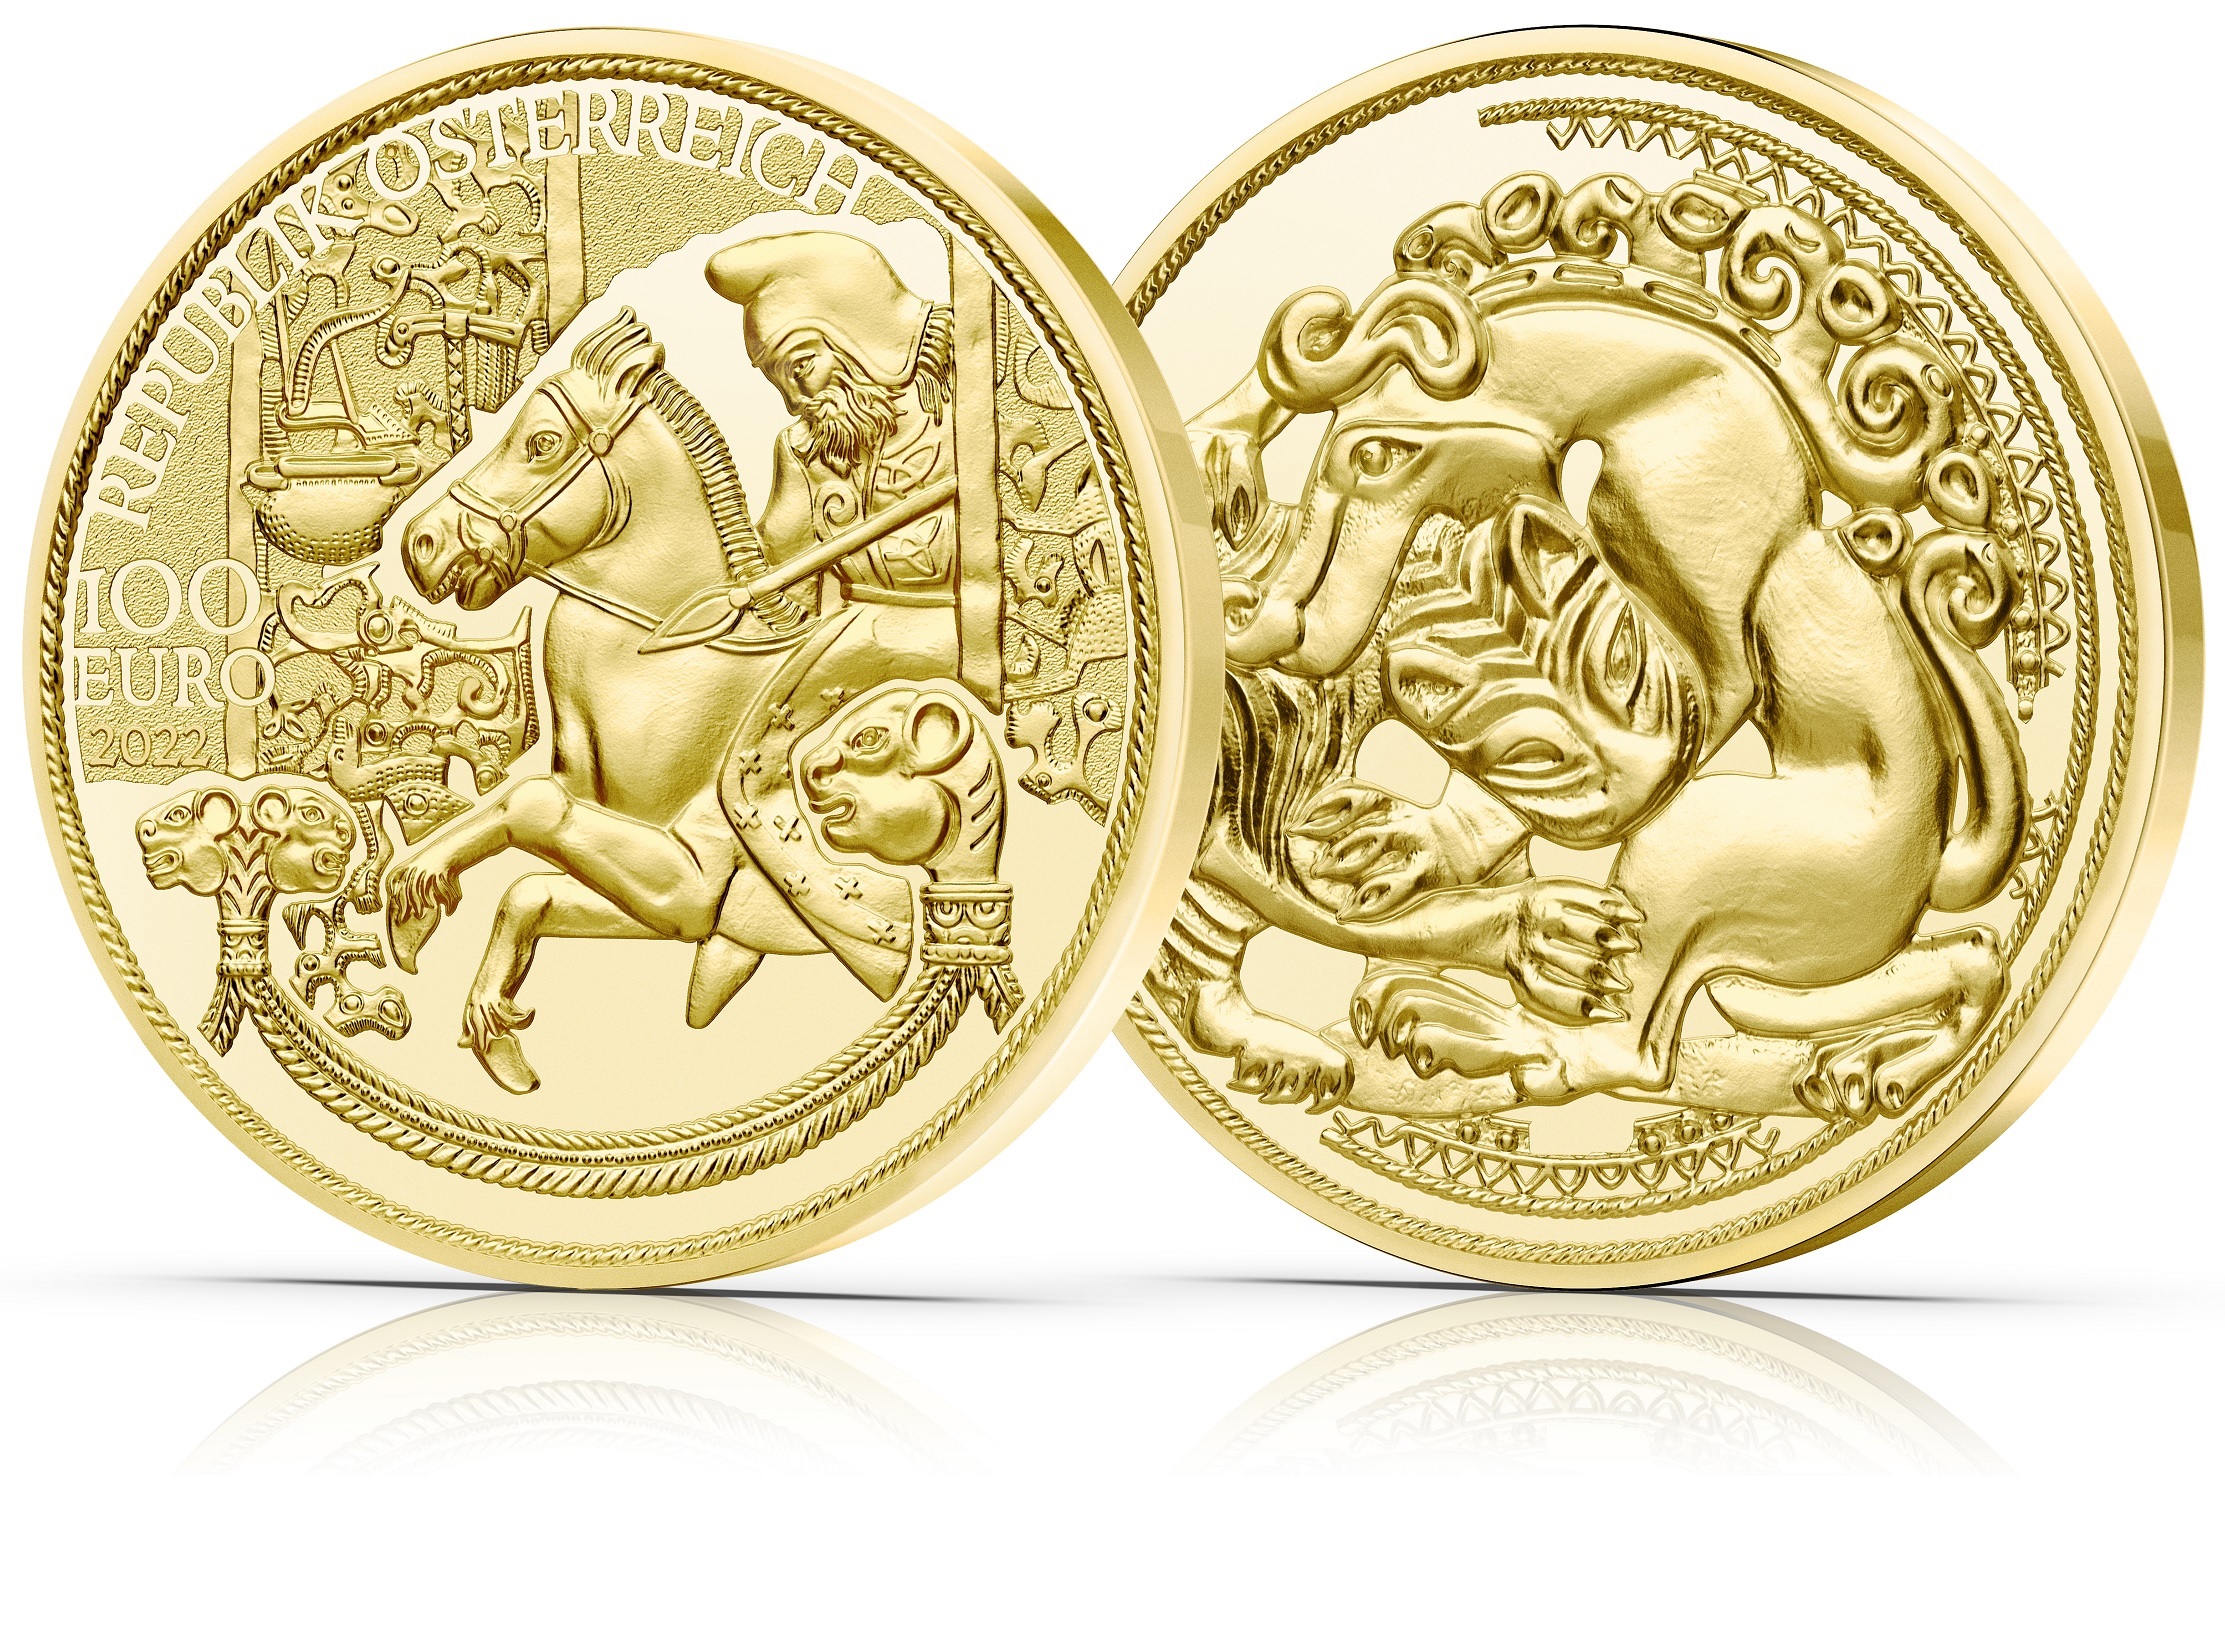 (EUR01.Proof.2022.25629) 100 euro Austria 2022 Proof Au - The Gold of the Scythians (zoom)